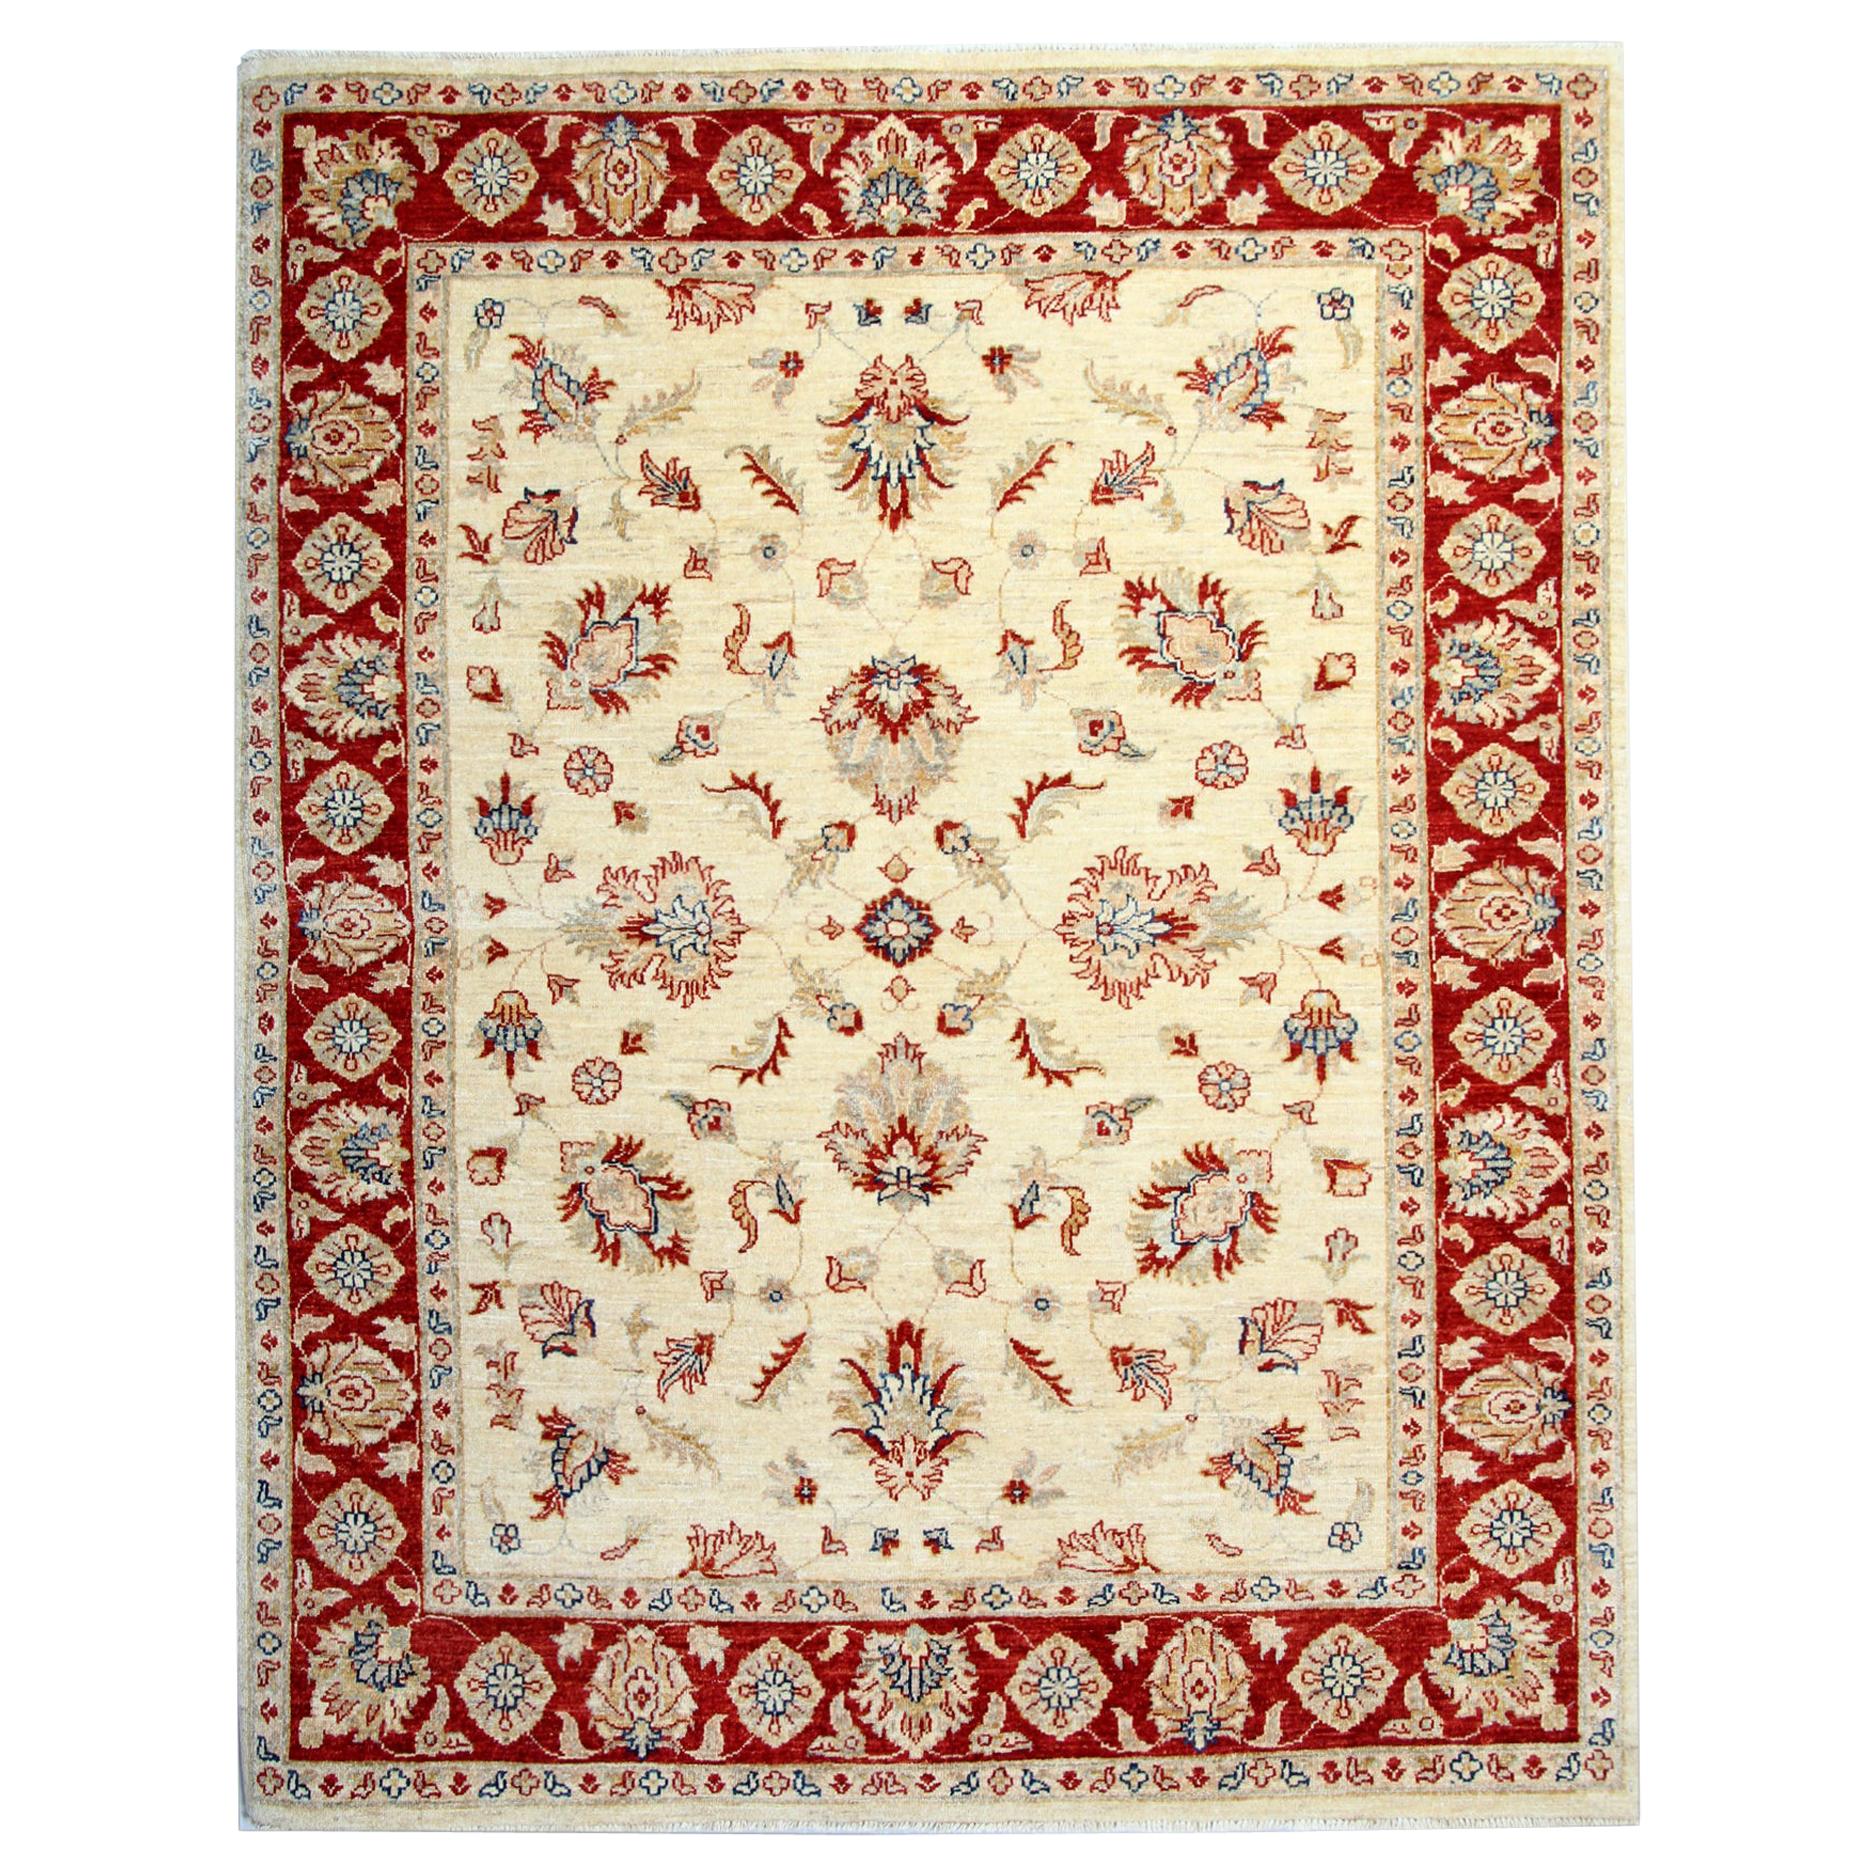 Handmade Saltanabad Ziegler Style Rug, Cream and Red Wool Rug